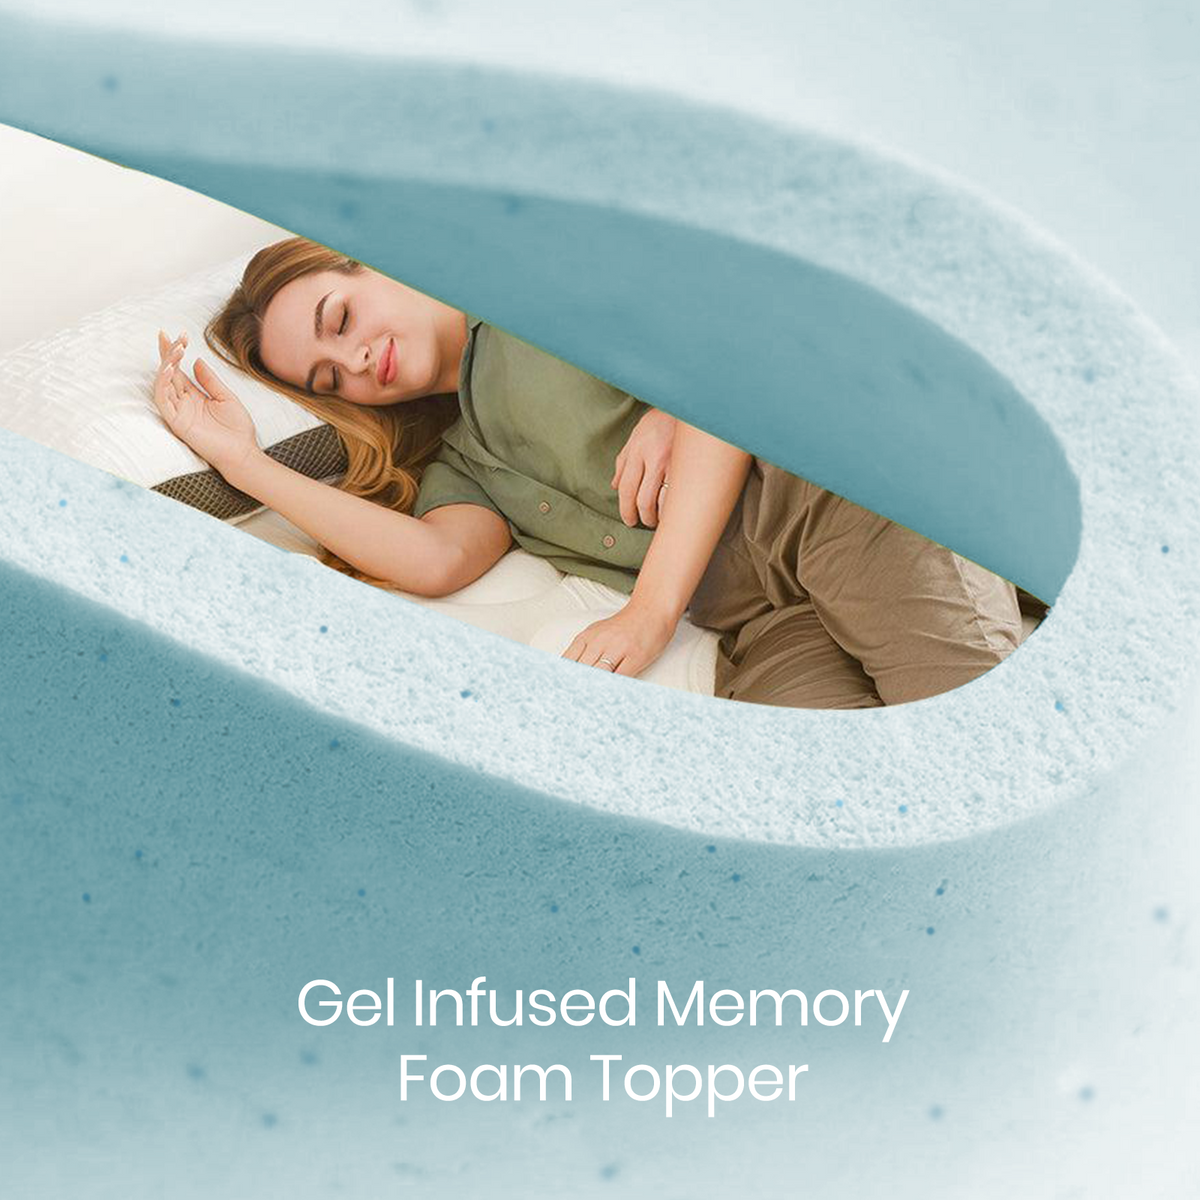 gel infused memory foam topper valmori spring mattress